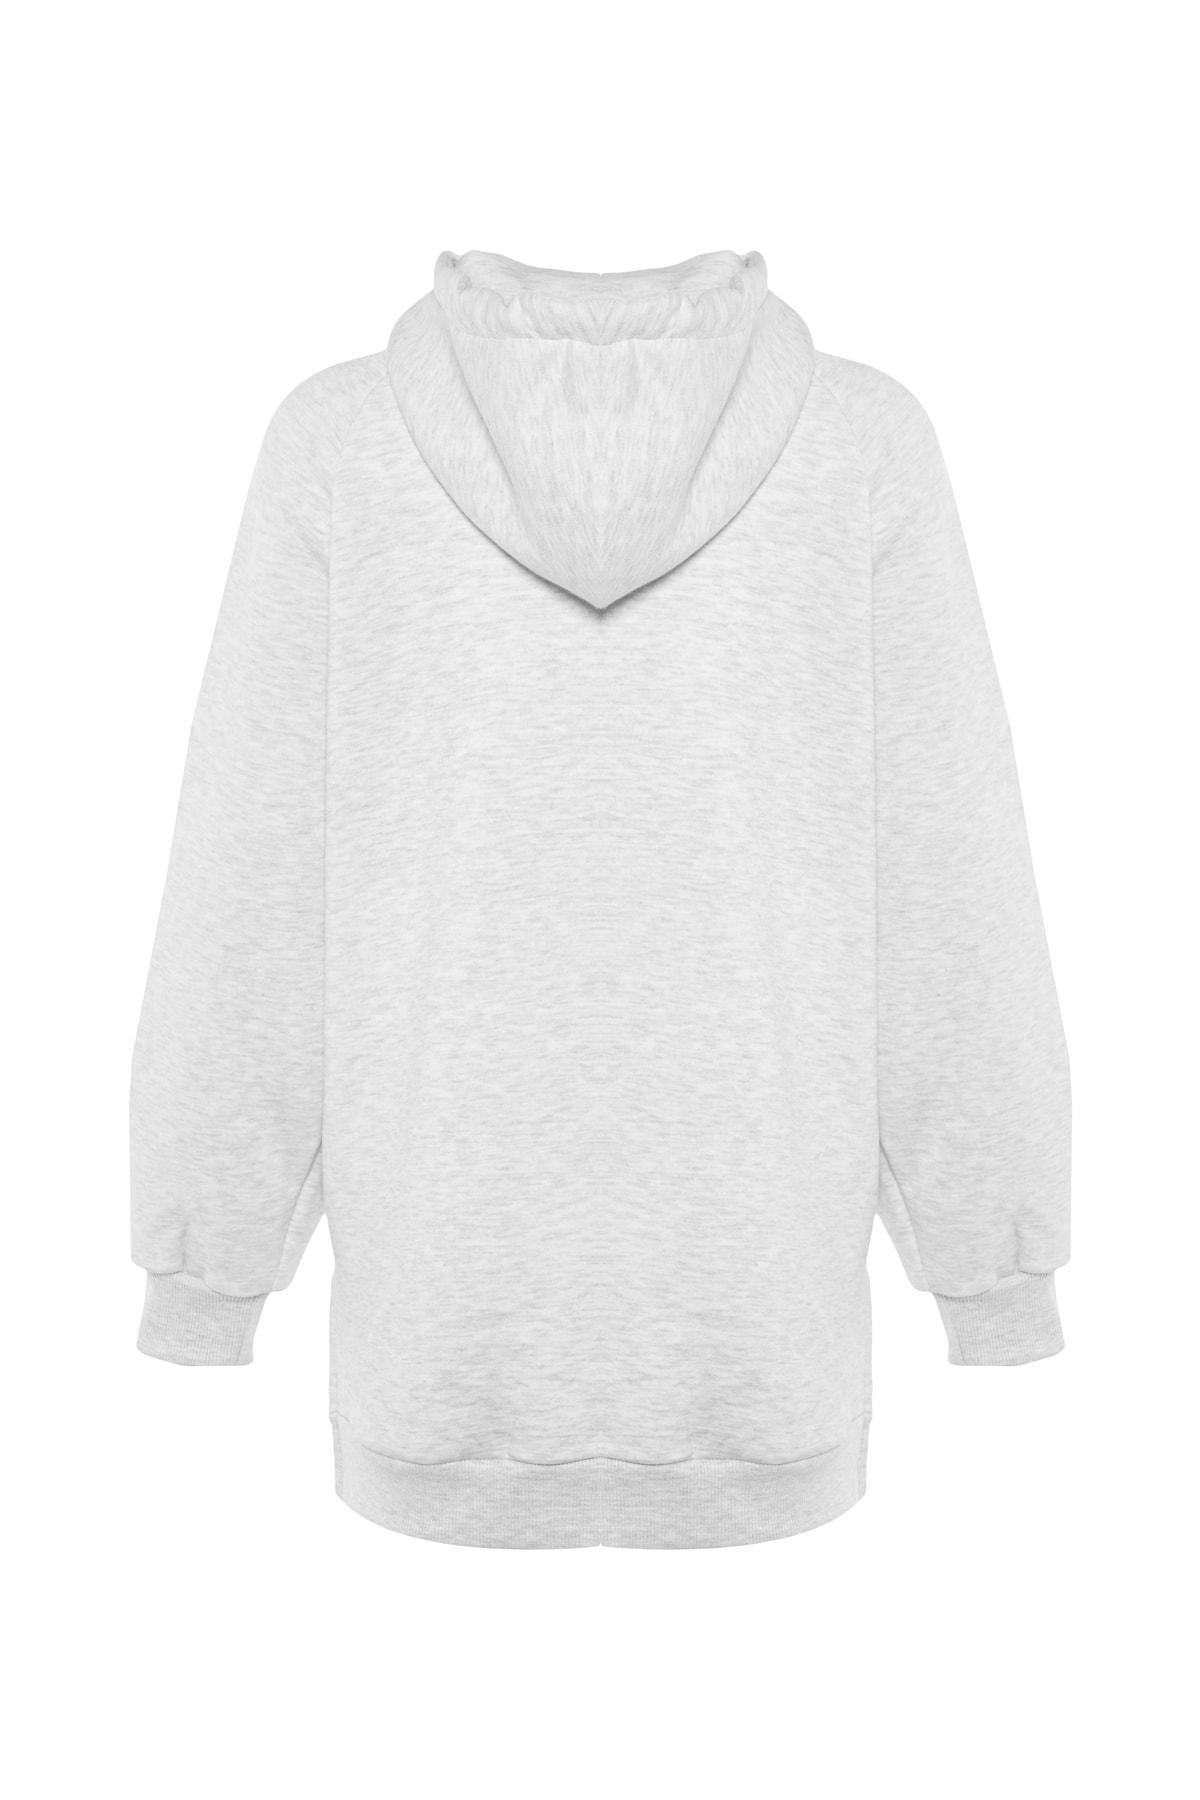 Trendyol - Gray Plain Hooded Sweatshirt